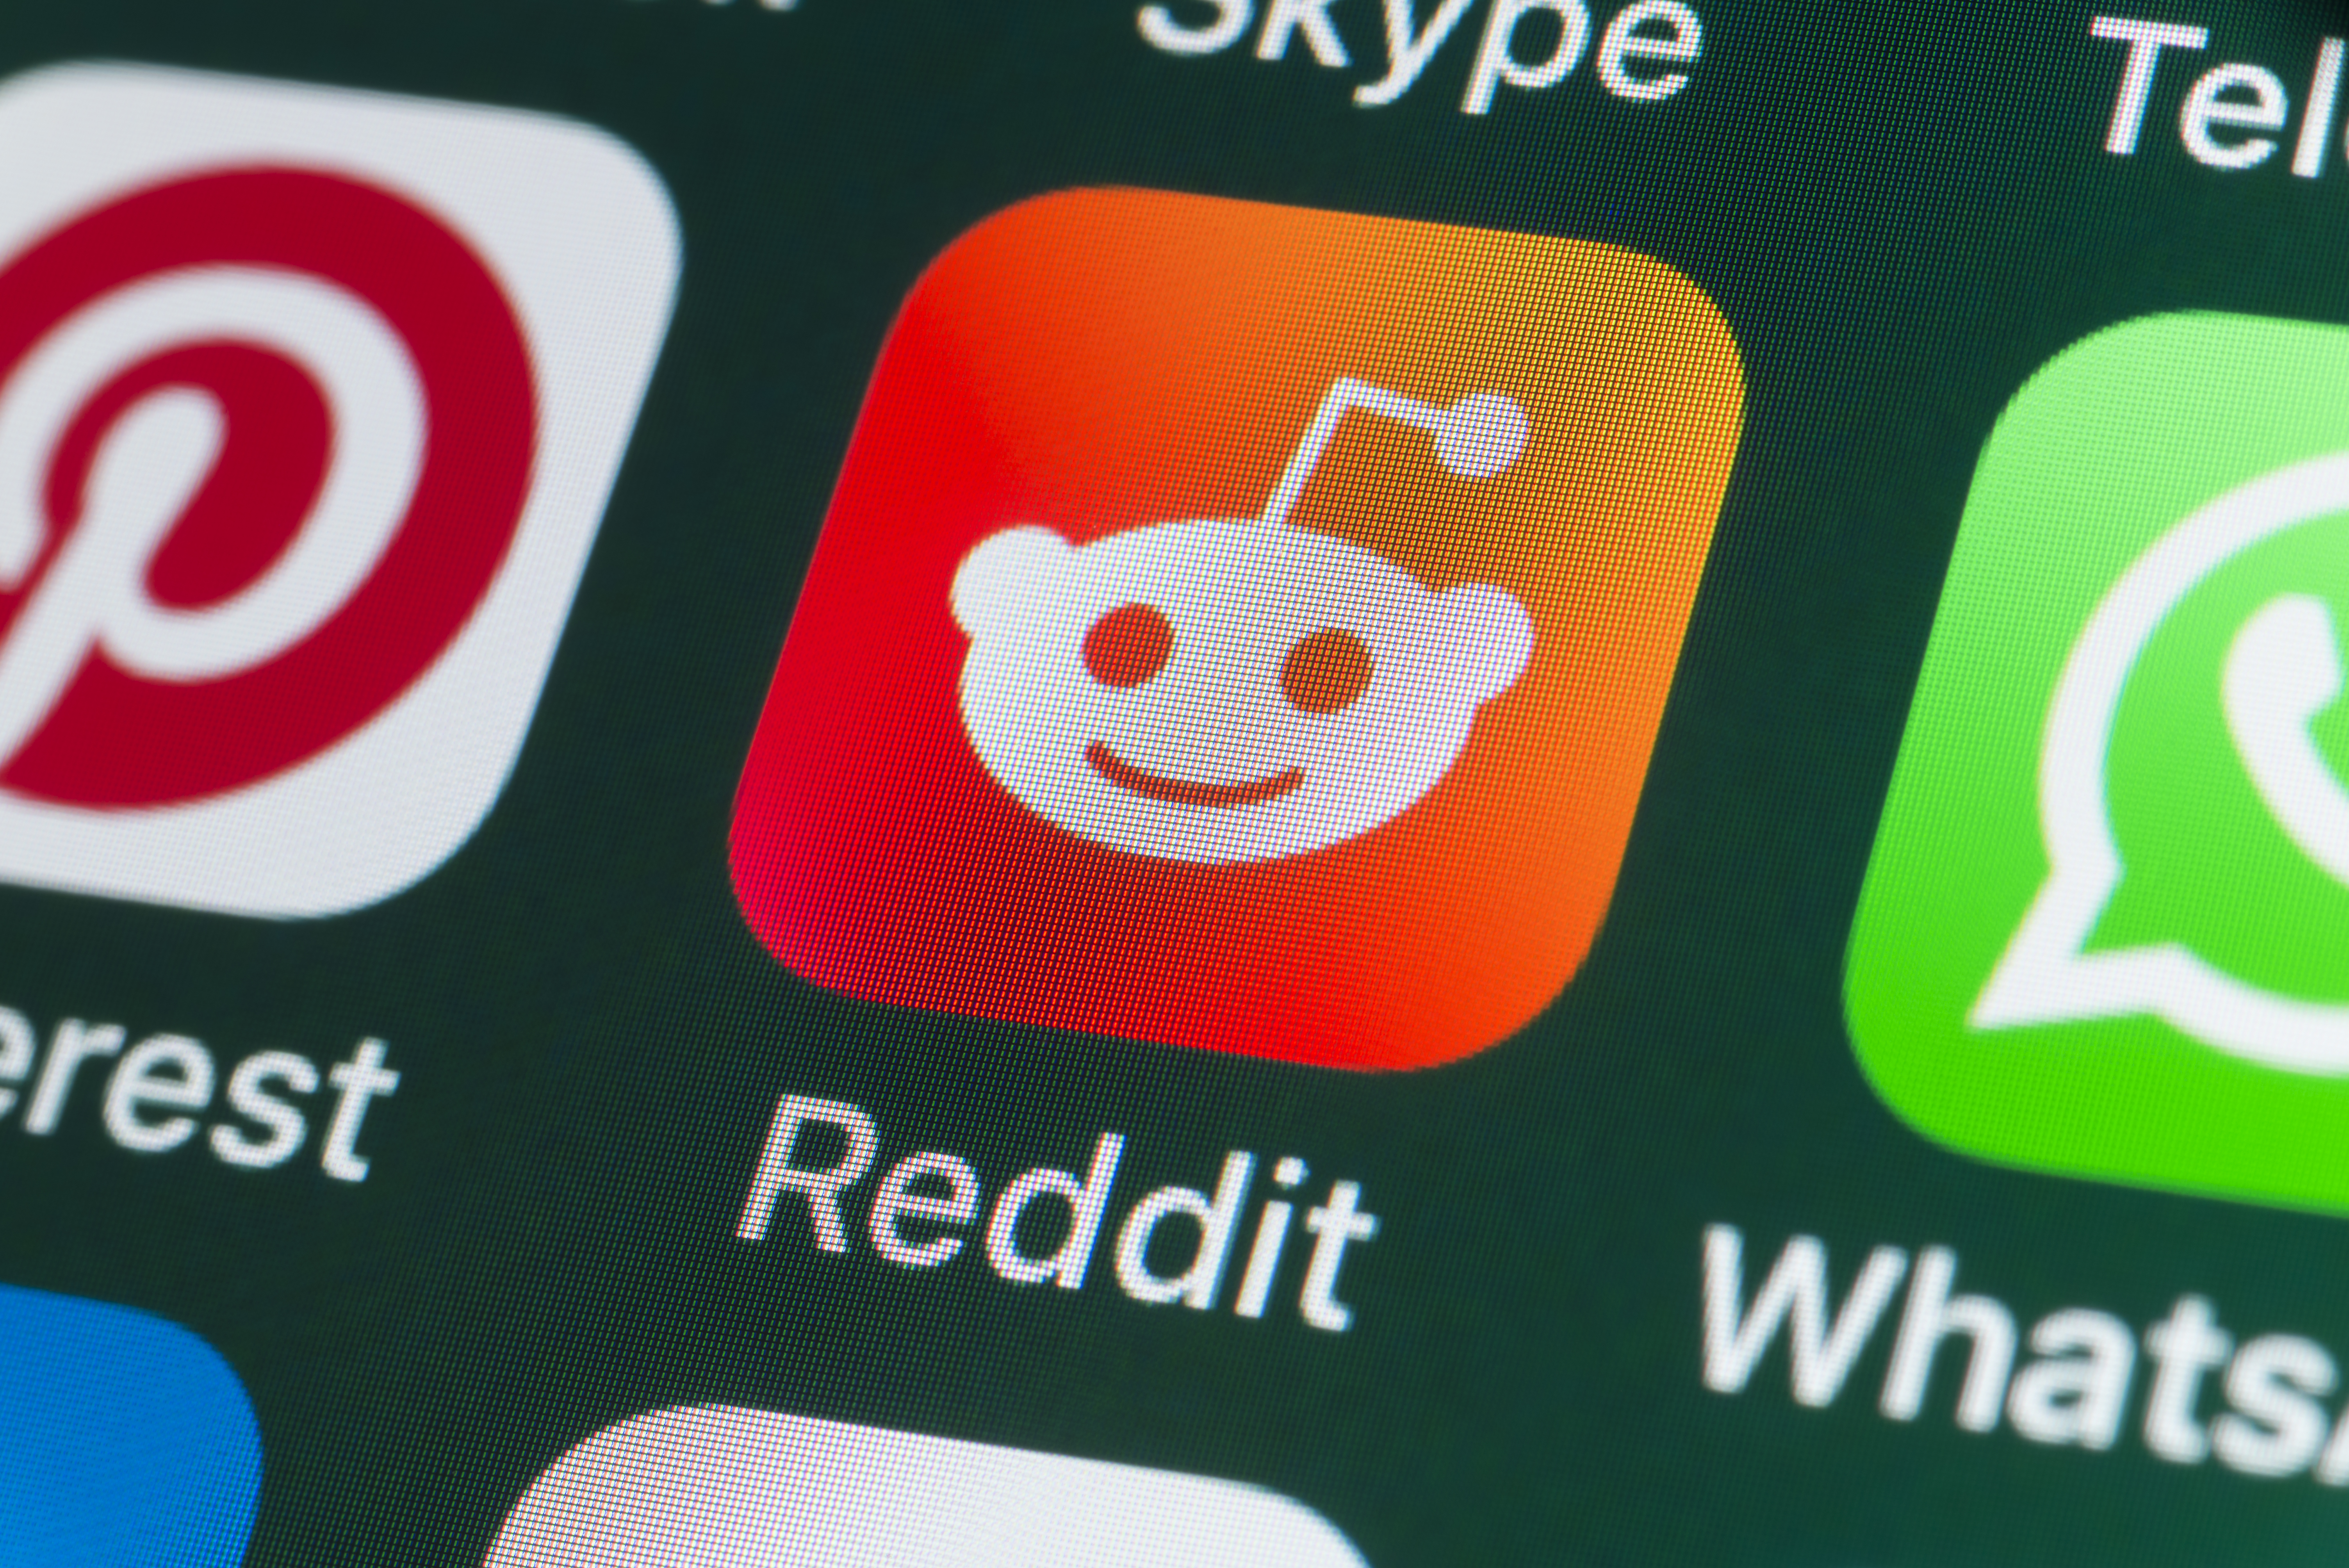 Reddit became popular among retail investors